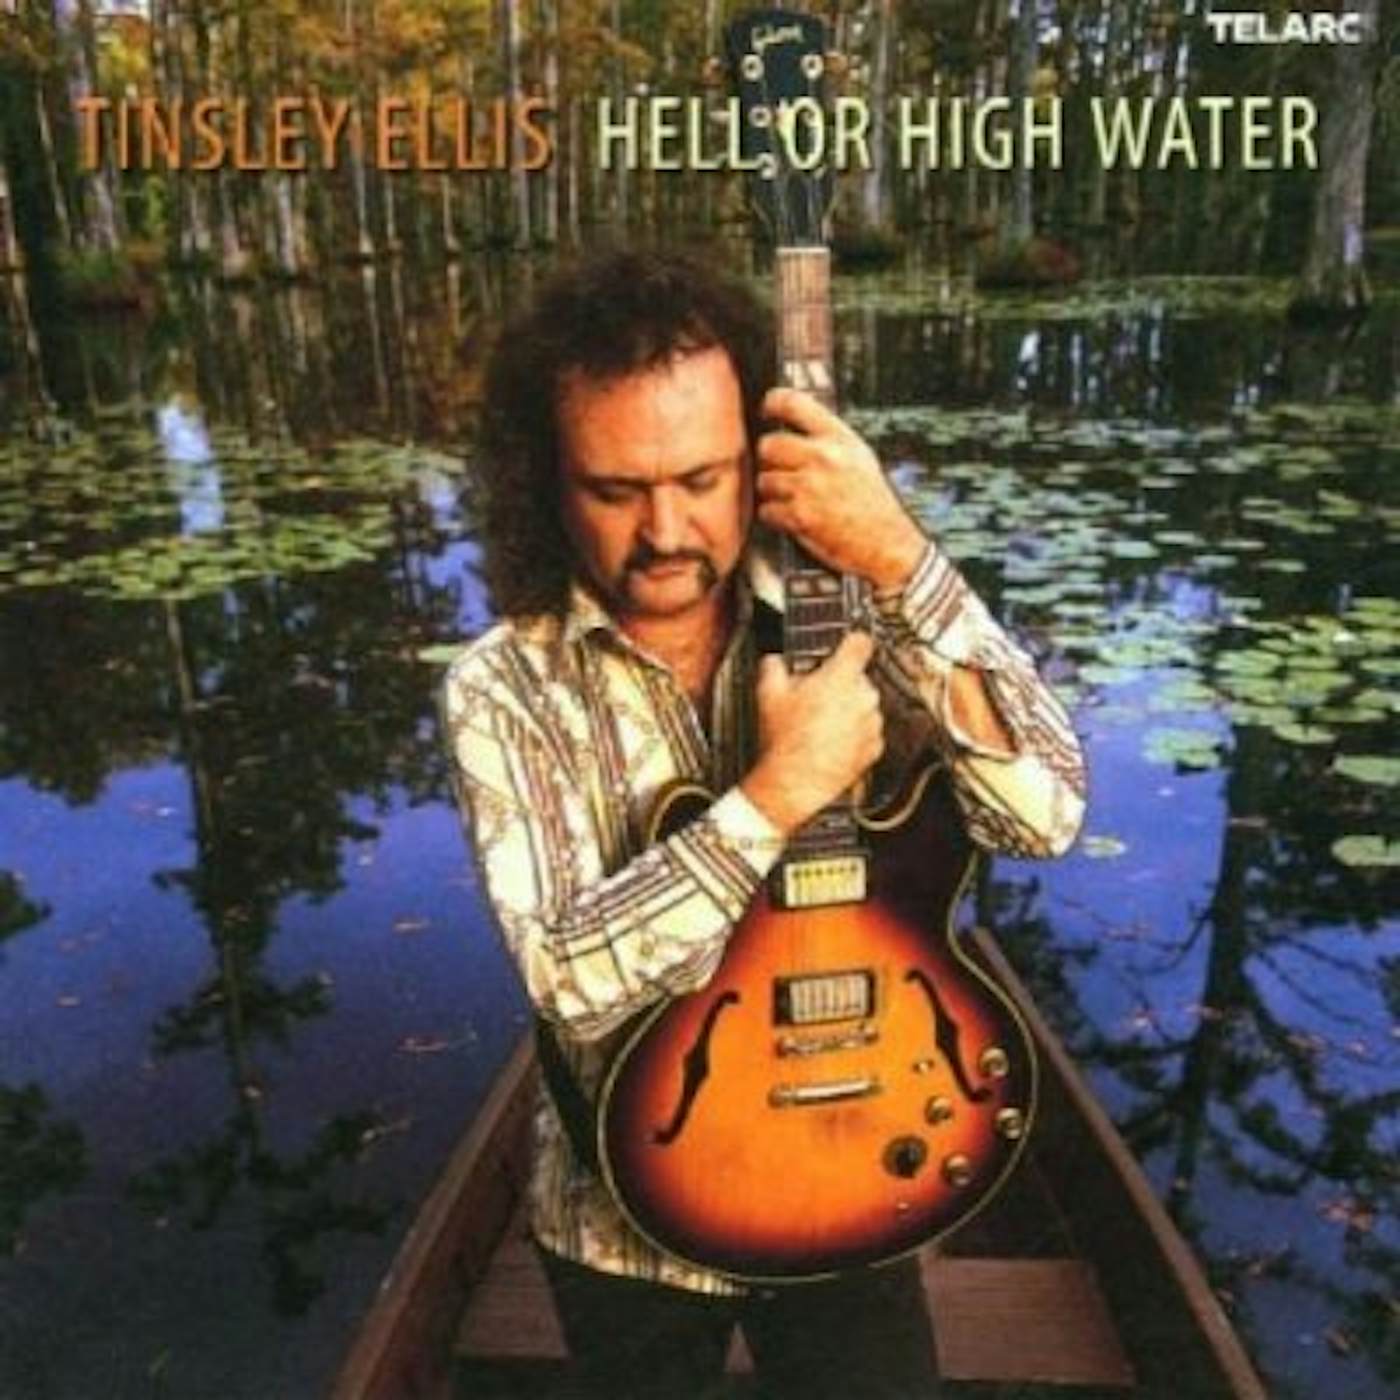 Tinsley Ellis HELL OR HIGH WATER CD